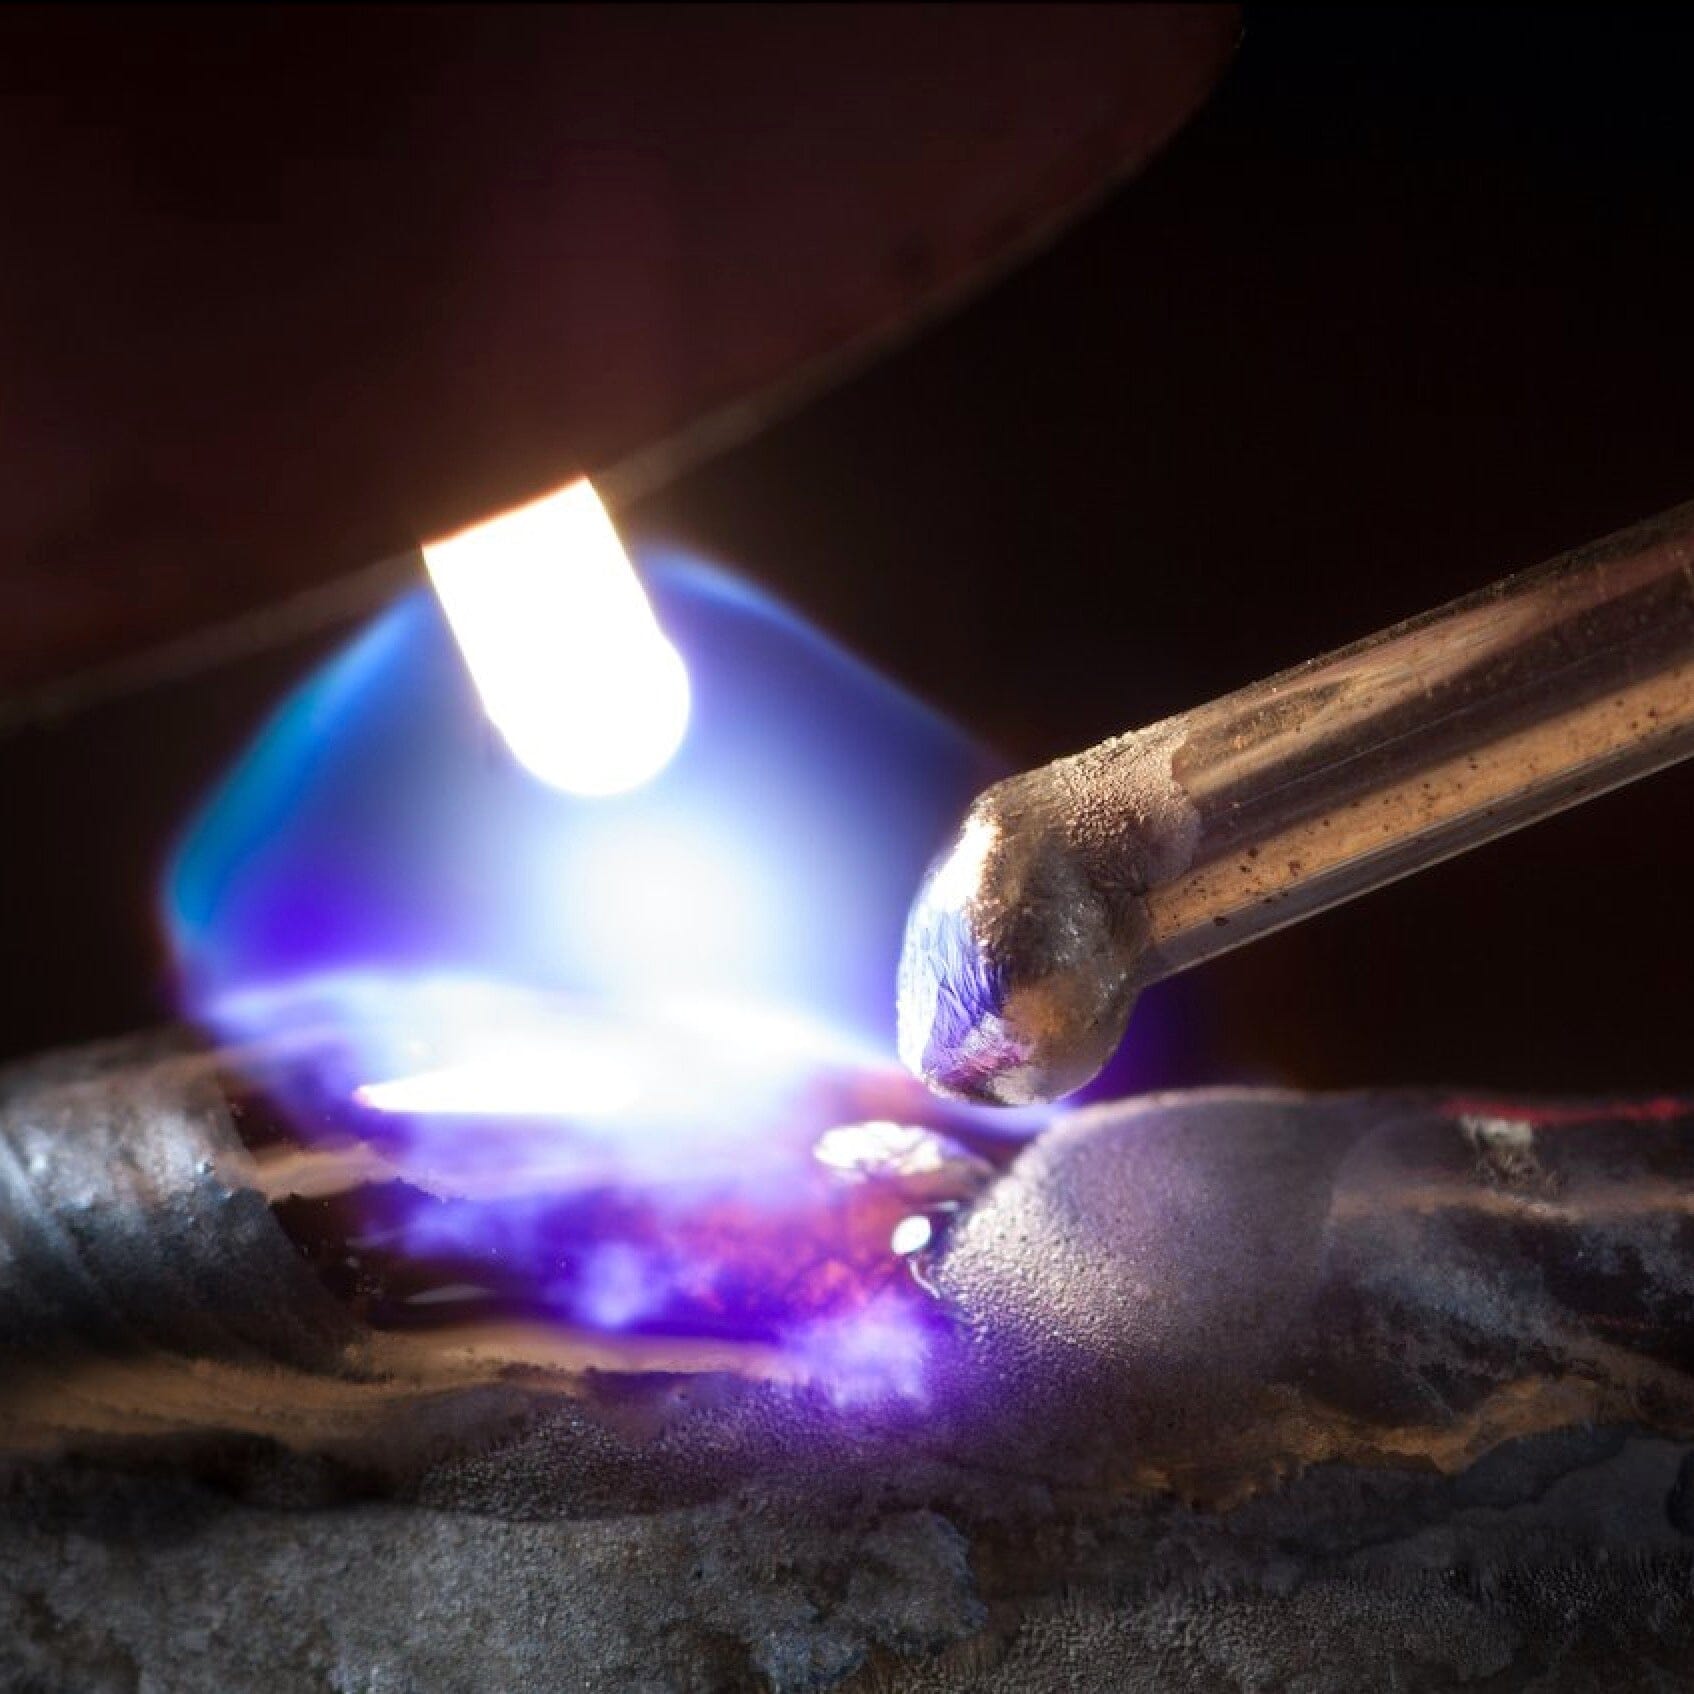 argon welding gas